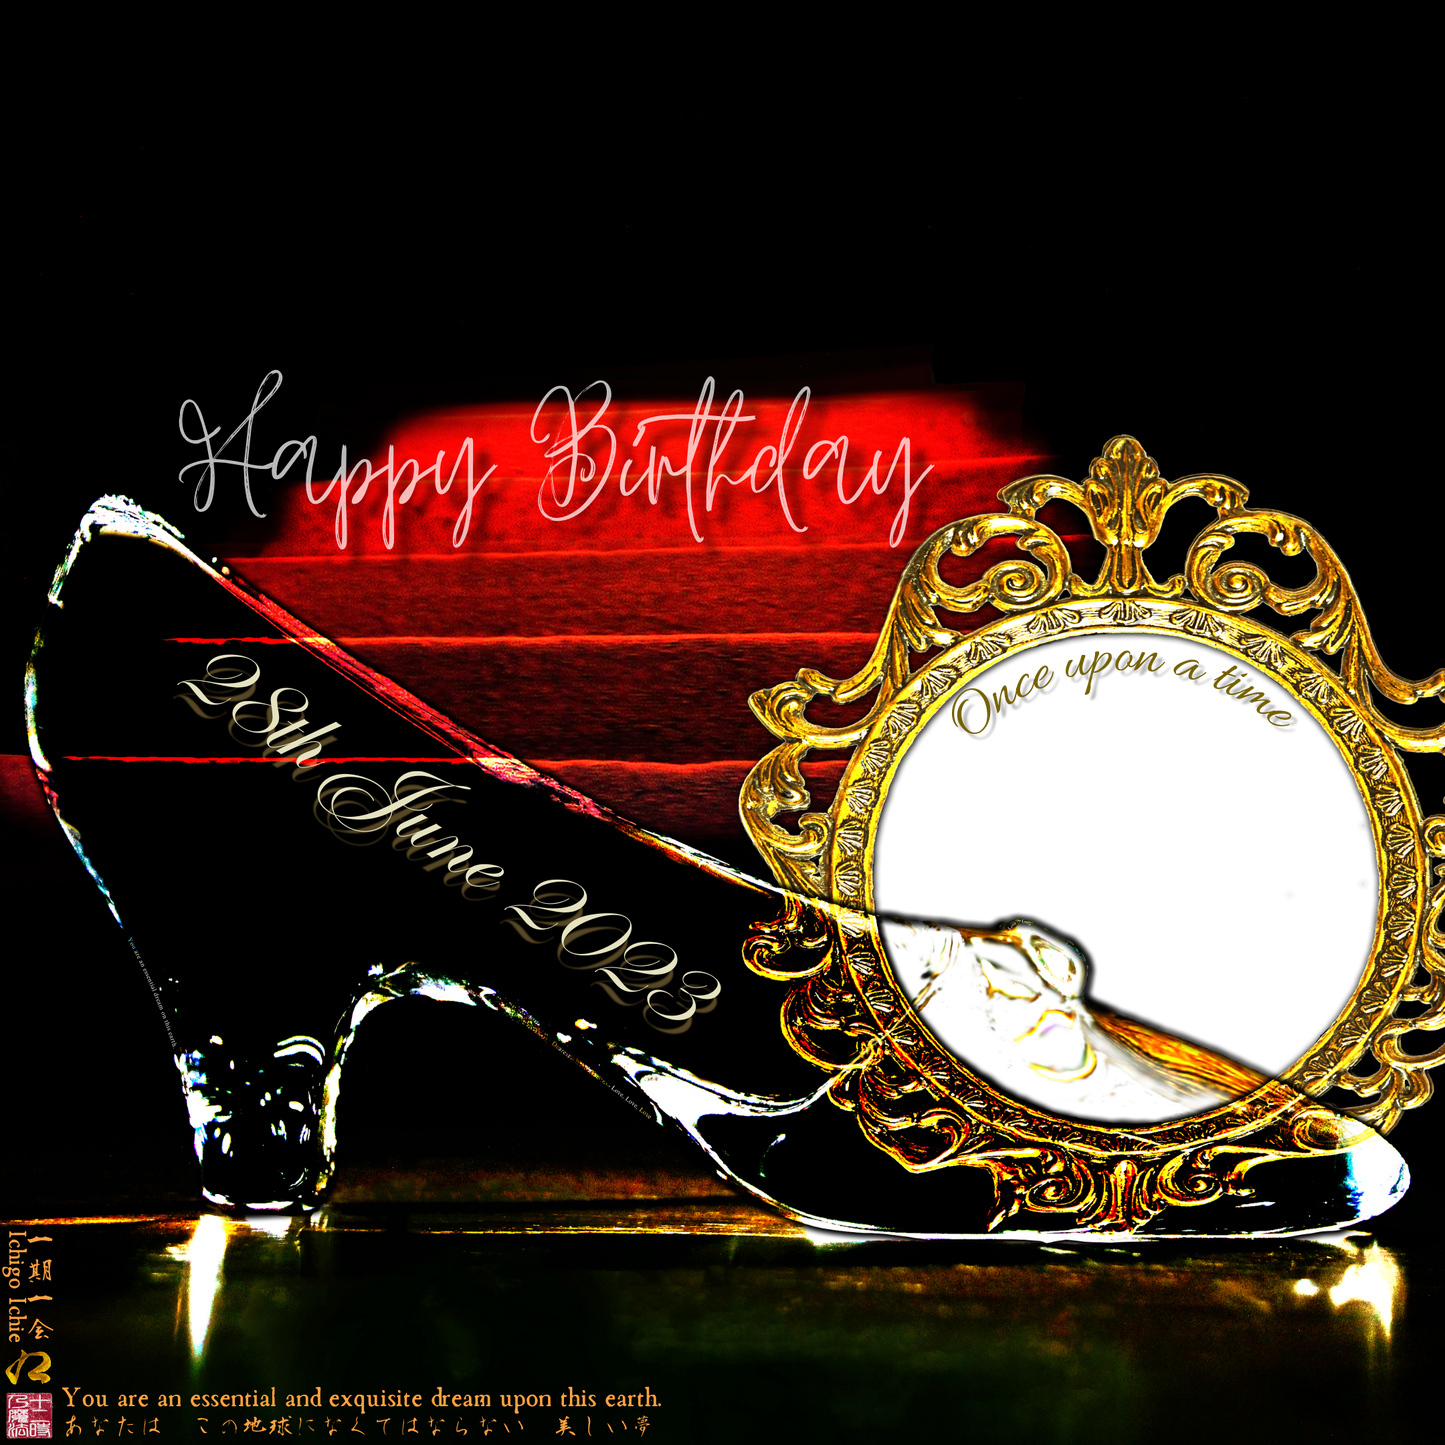 Happy Birthday Glass Slipper "Ichigo Ichie" 28th June 2023 the Right (1-of-1) NFT Art